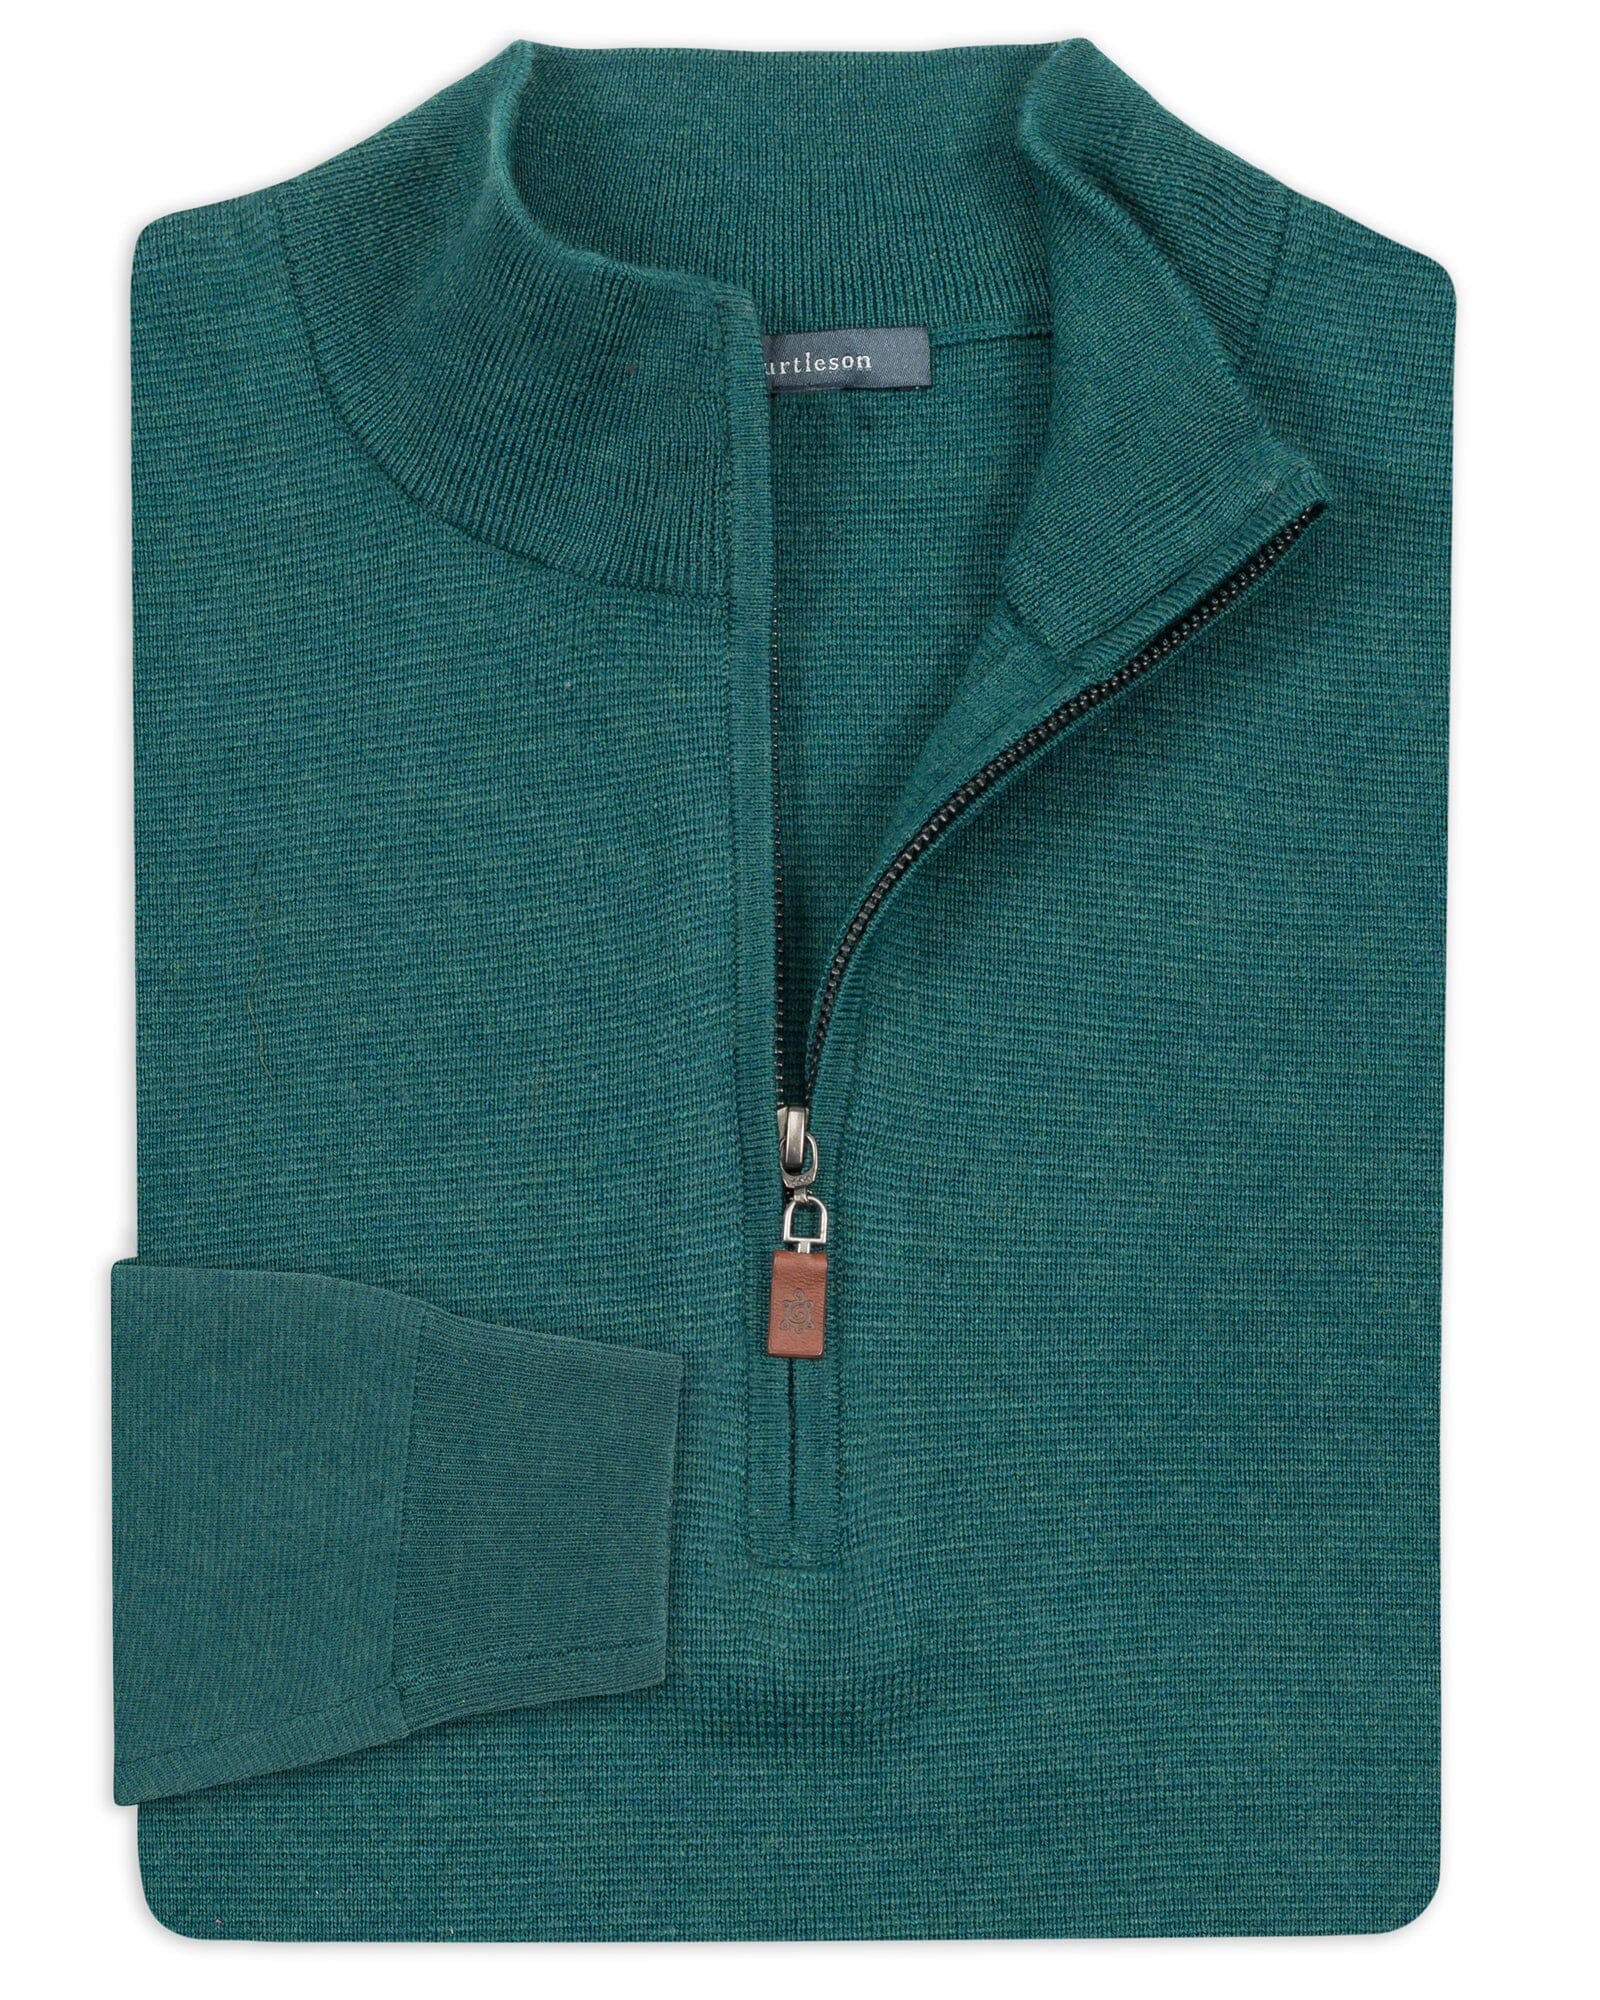 Extra Fine turtleson Merino – Sweater Milano-Stitch Quarter-Zip